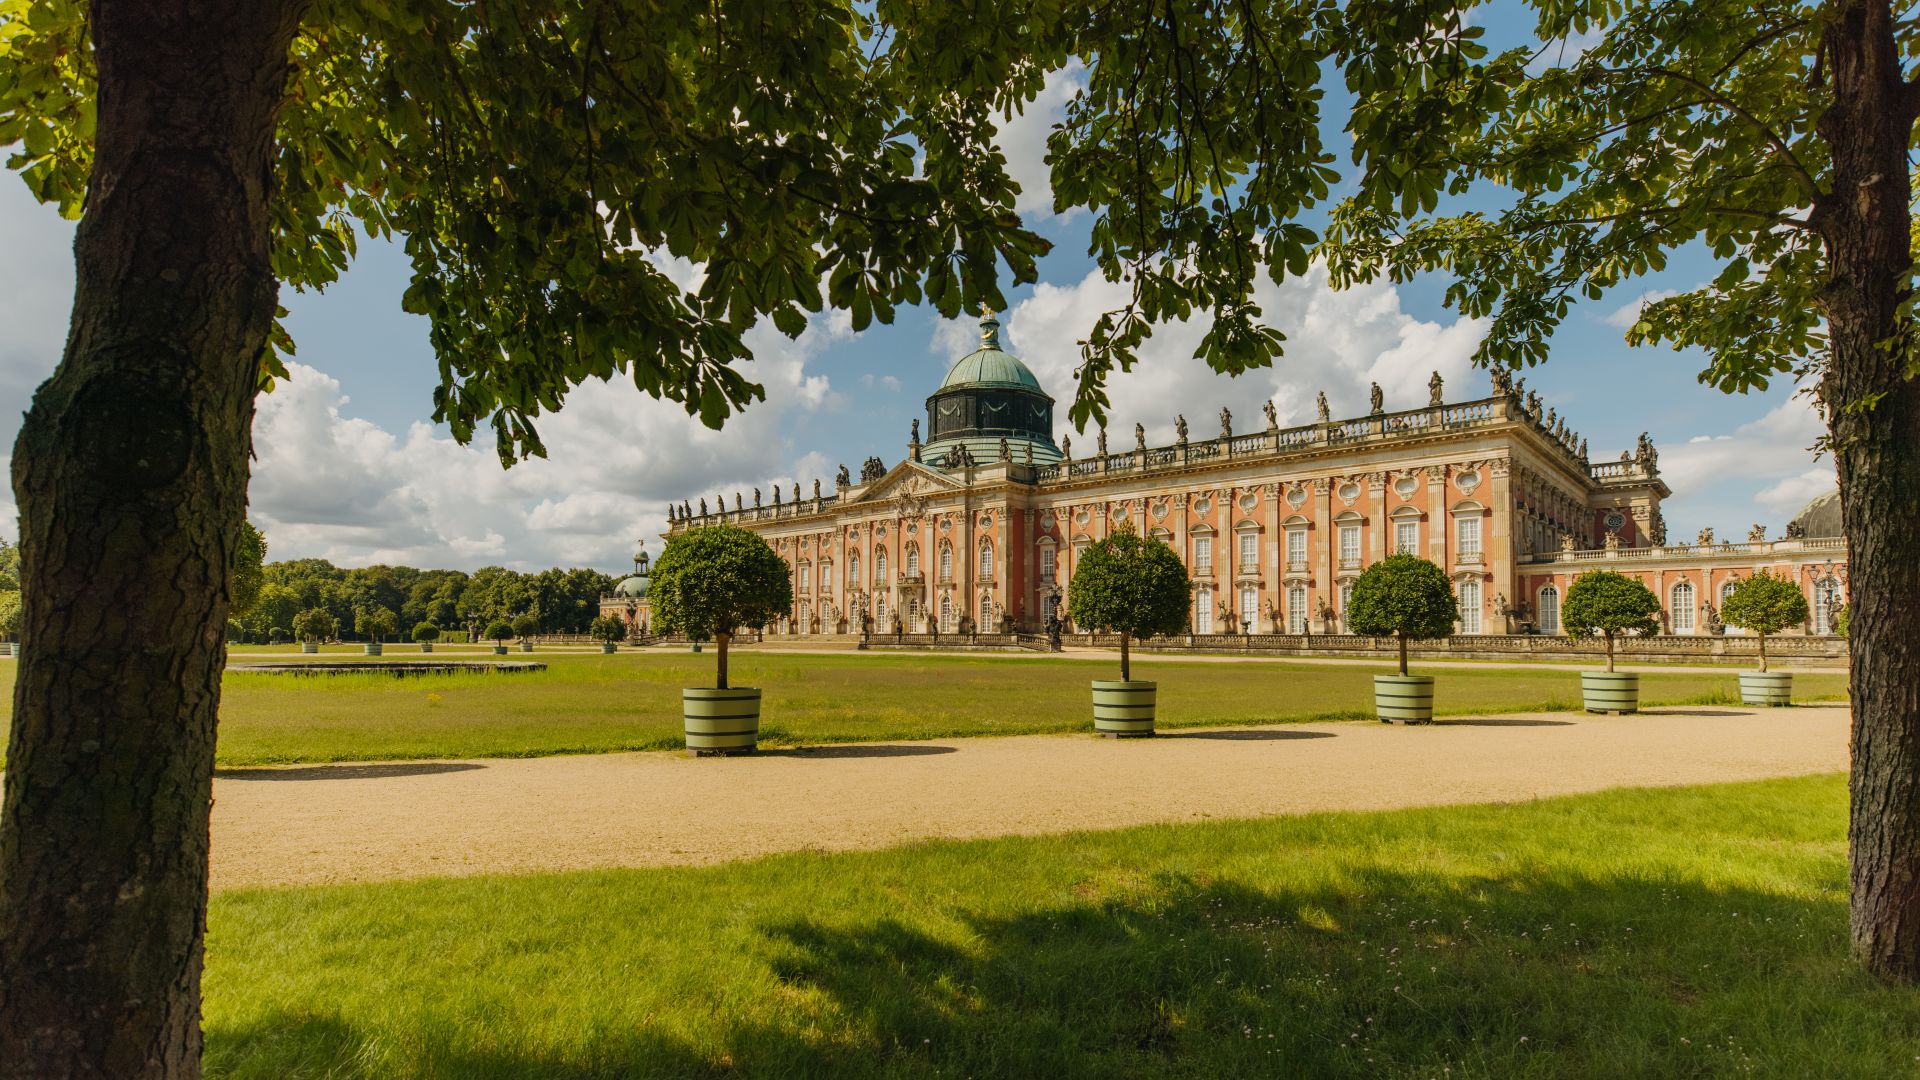 Potsdam: Palace garden of Sanssouci Palace